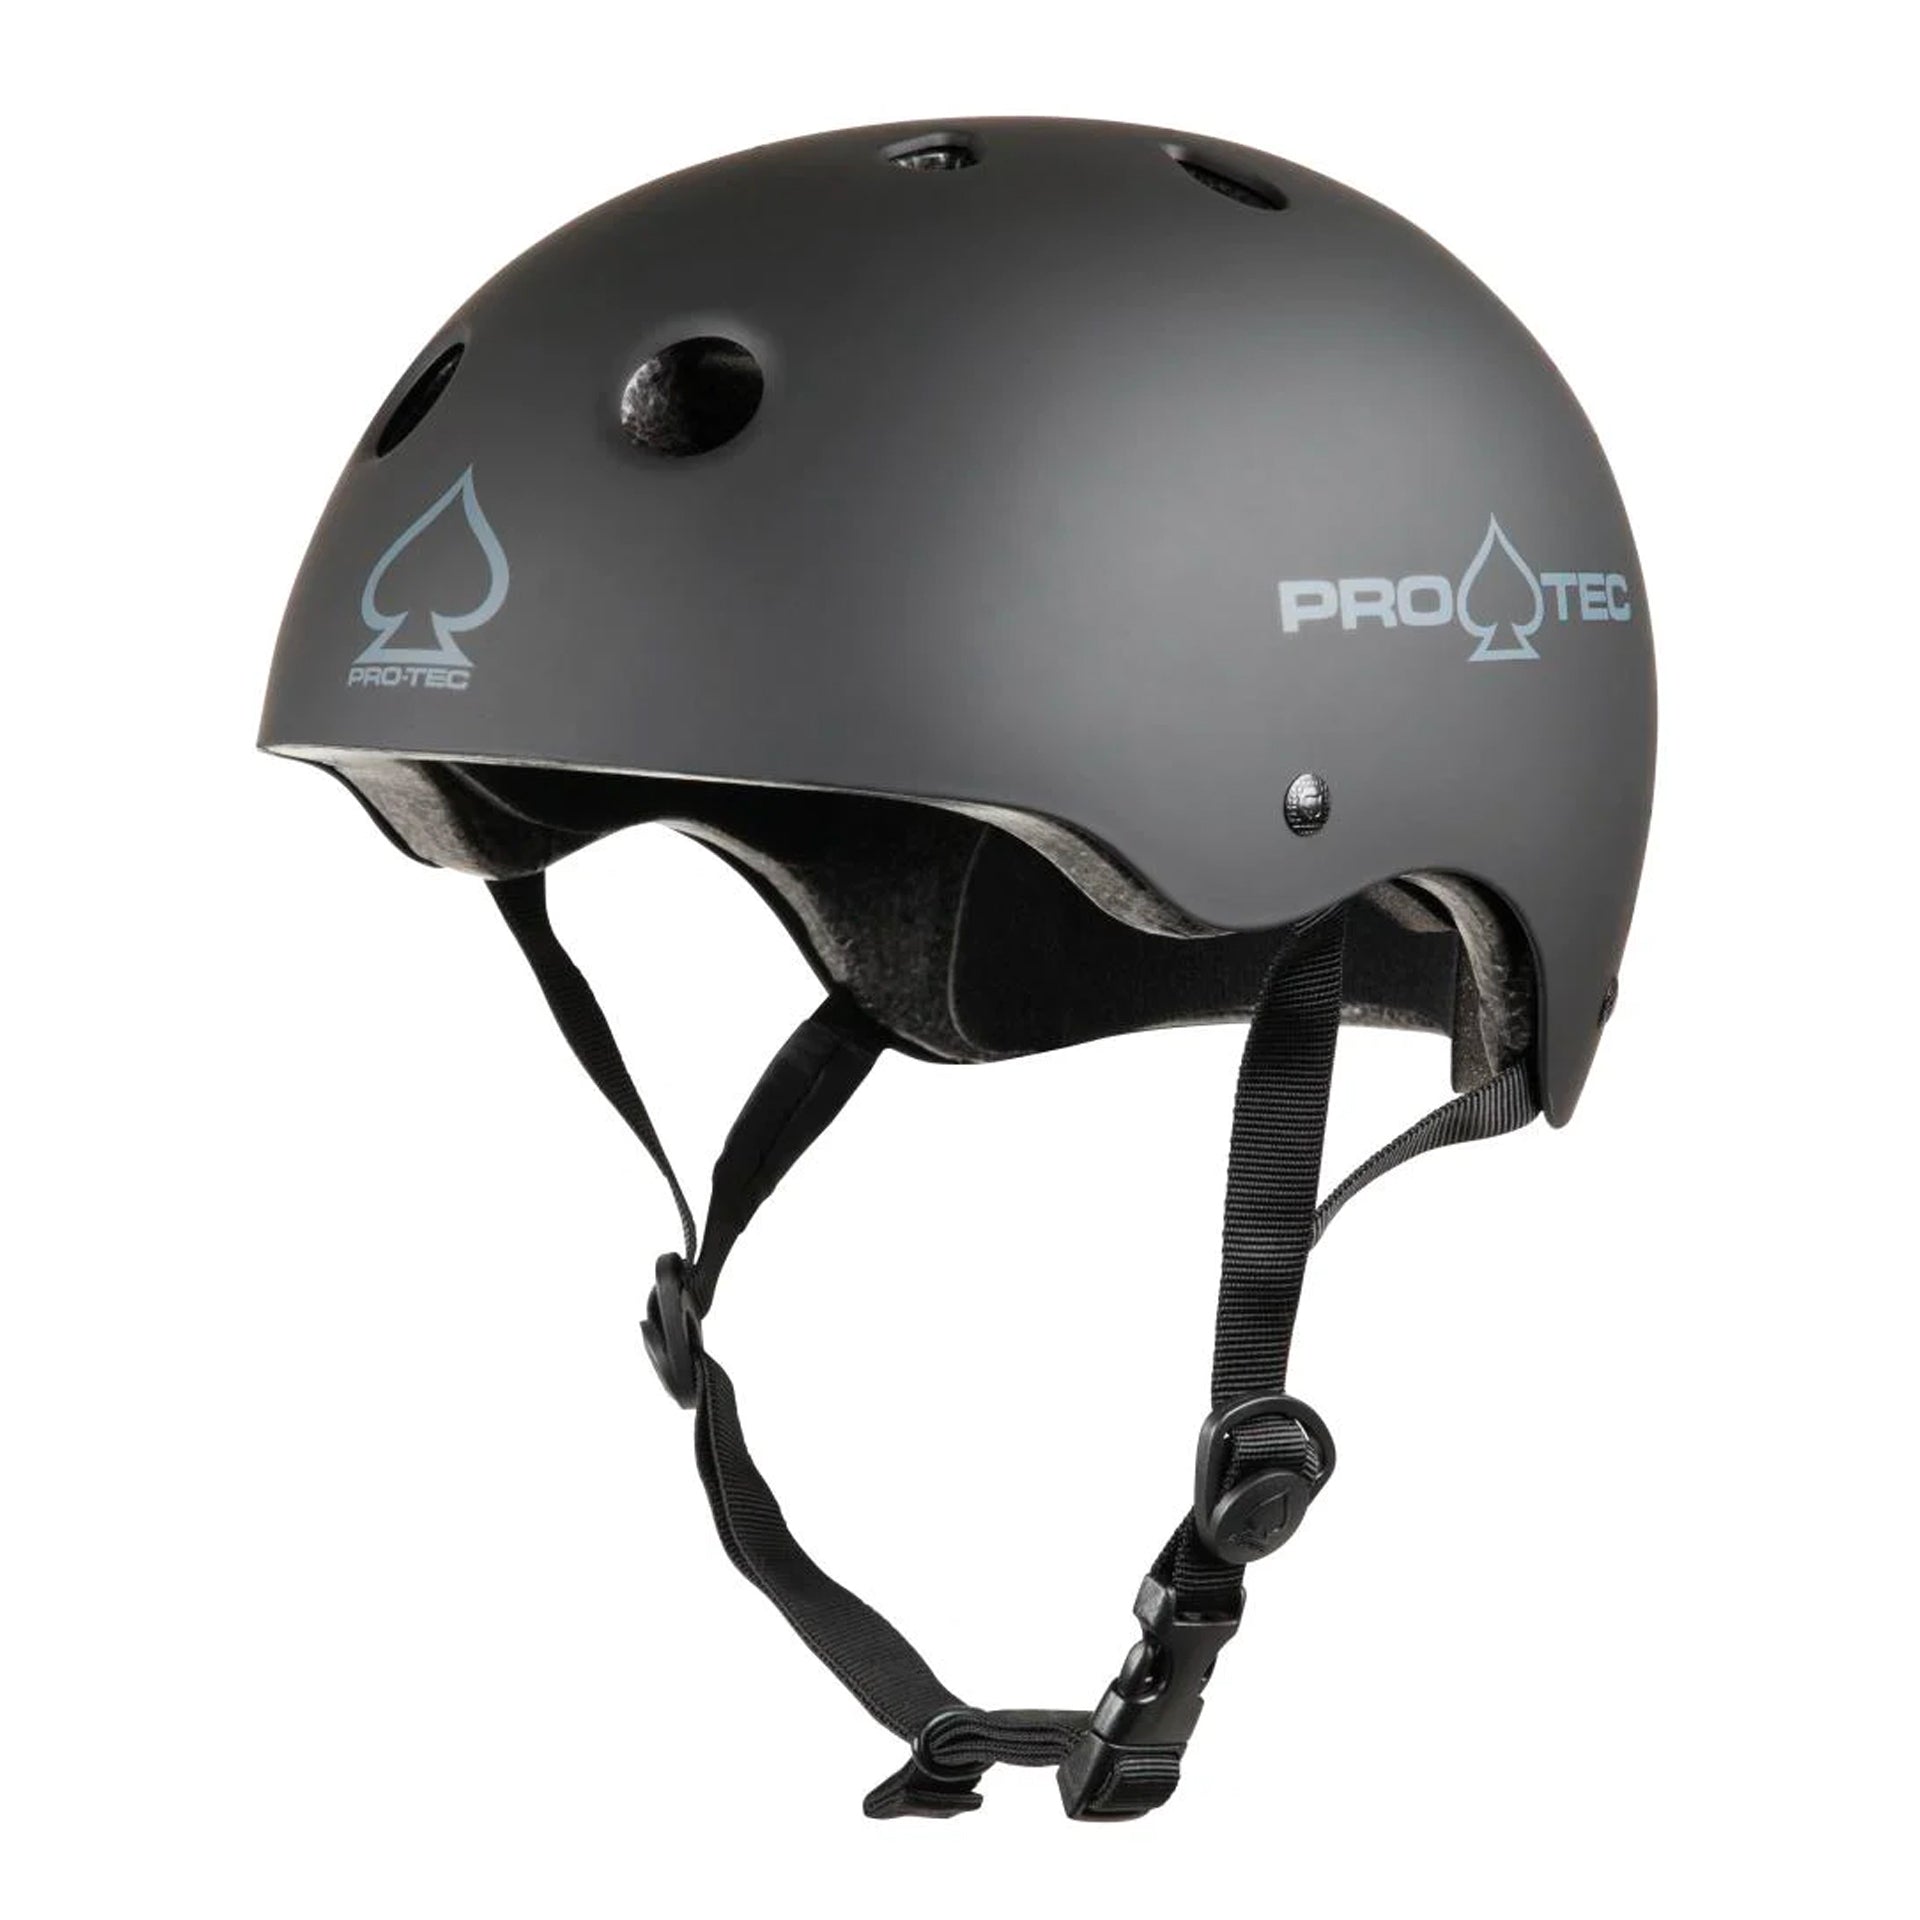 Pro-Tec Helmet Classic Certified - Matte Black - Prime Delux Store